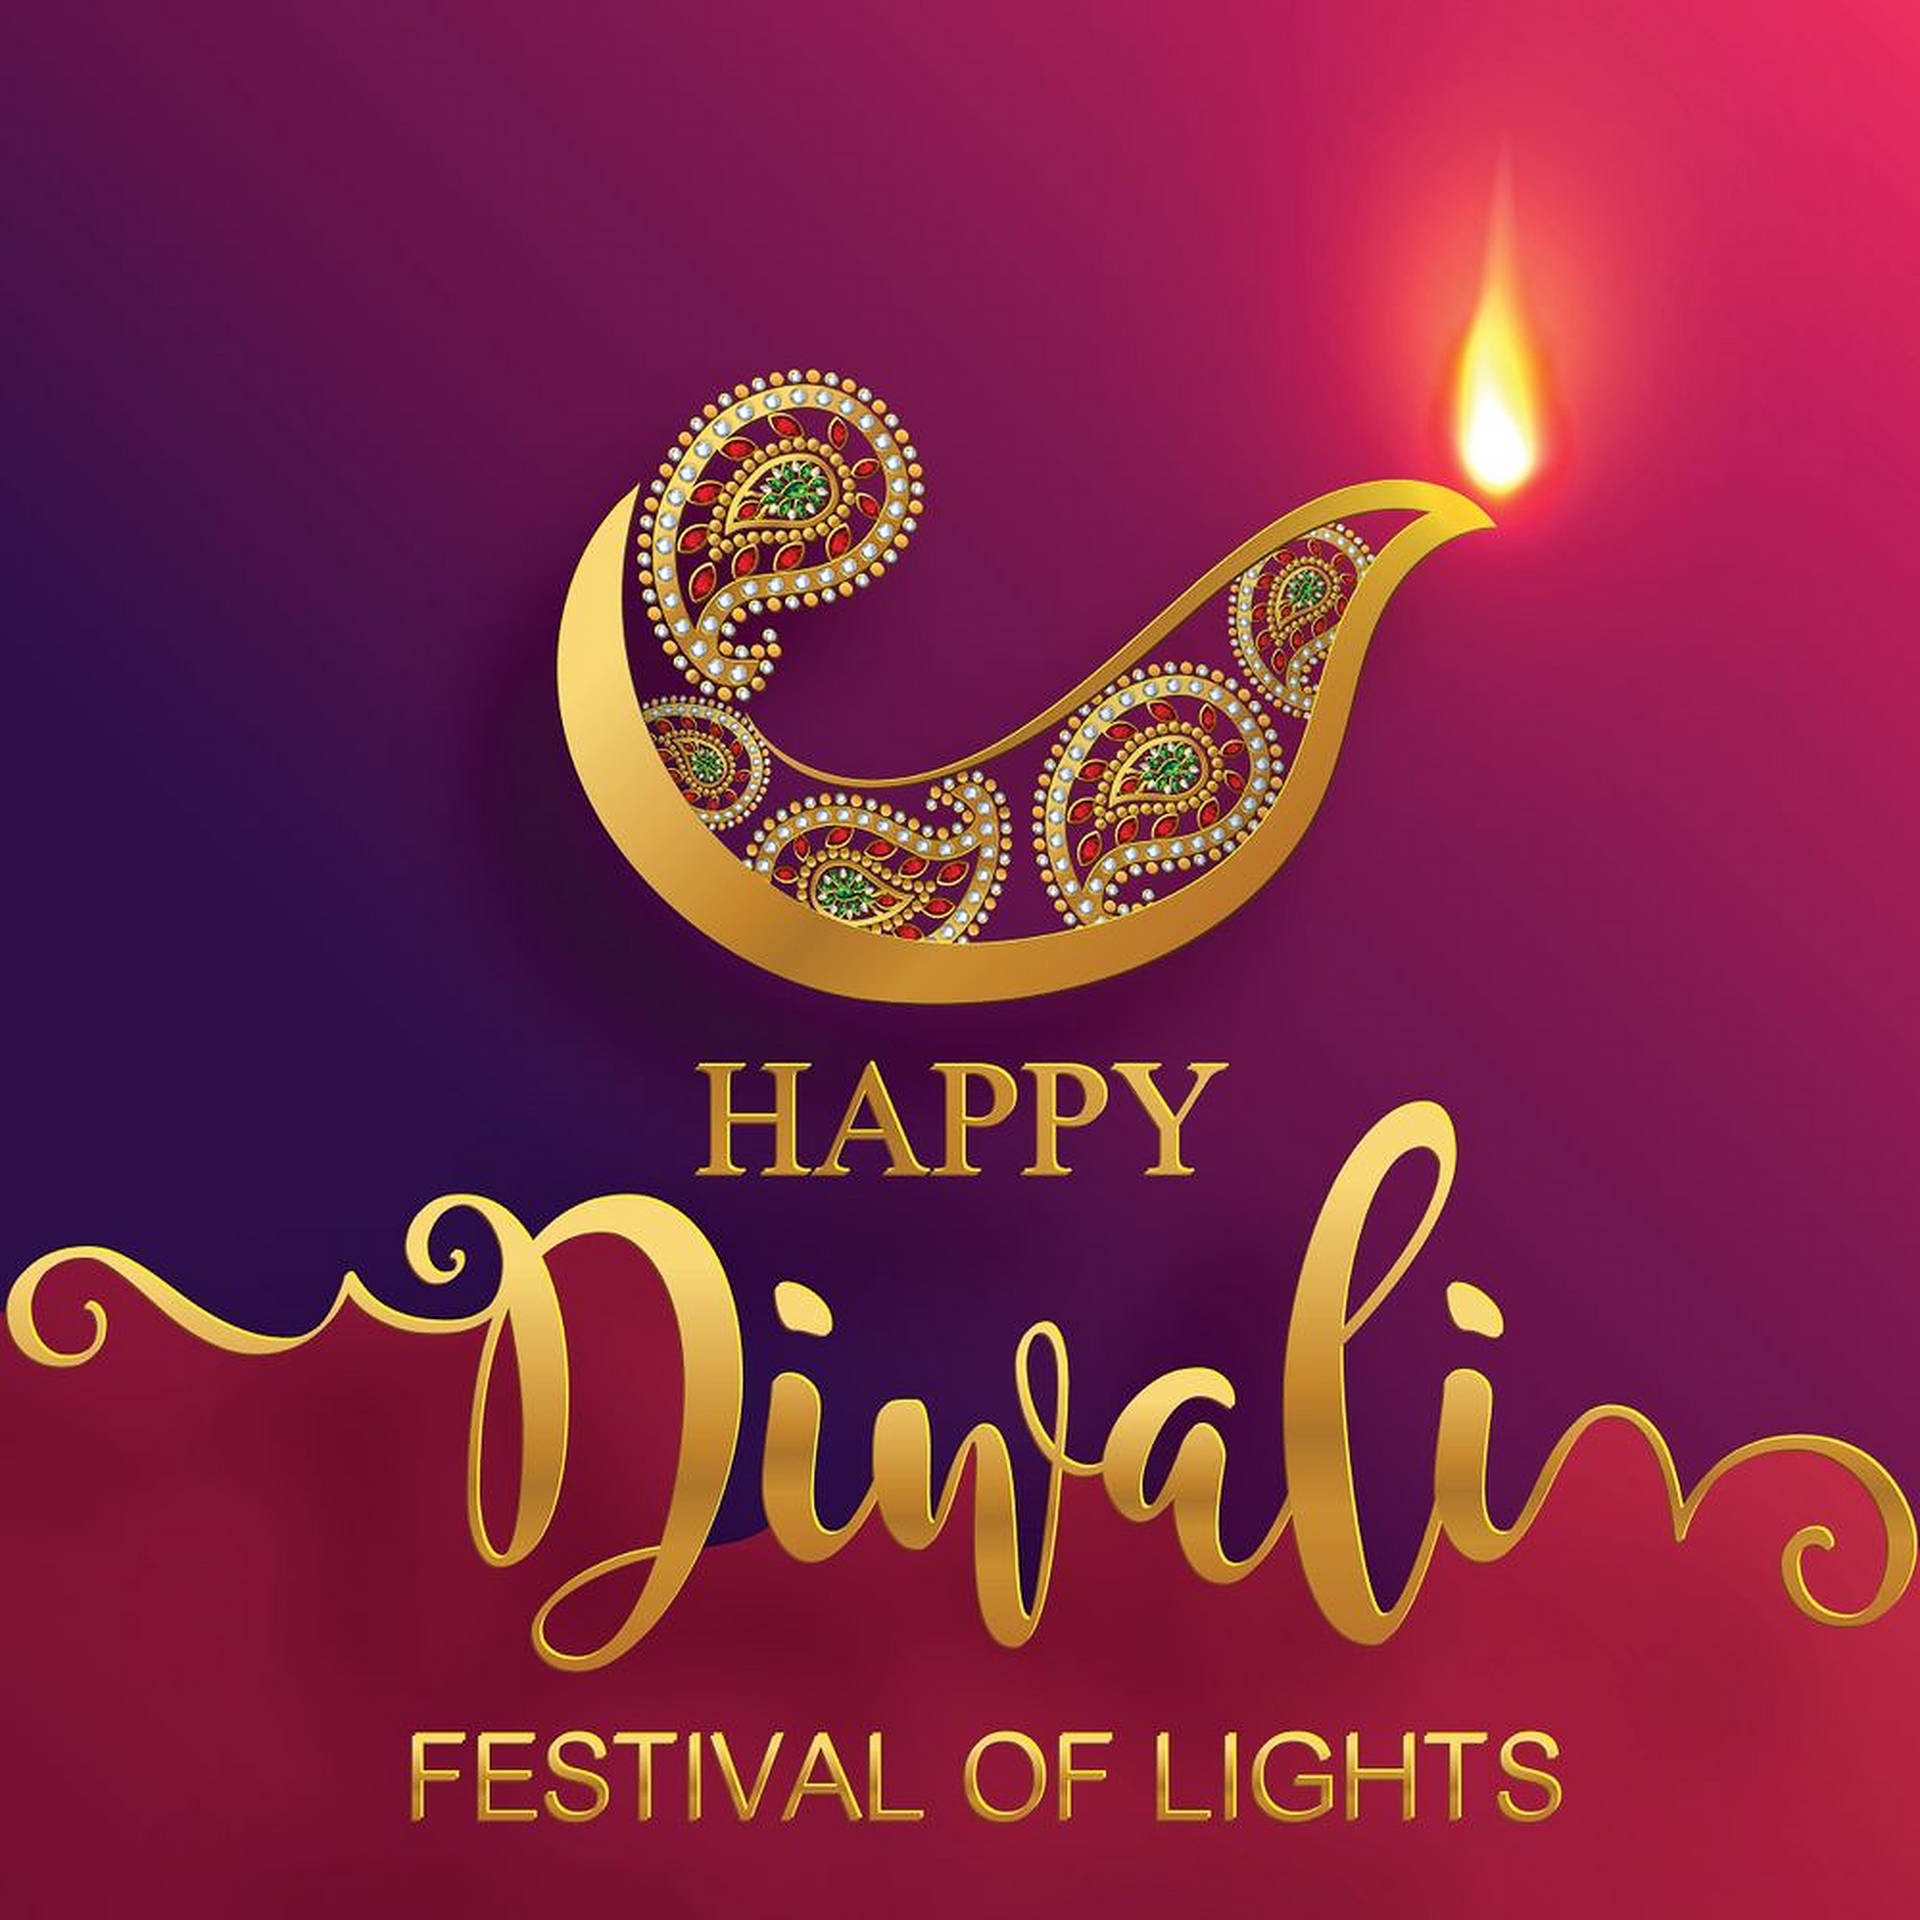 Free Diwali Wallpaper Downloads, [100+] Diwali Wallpapers for FREE |  